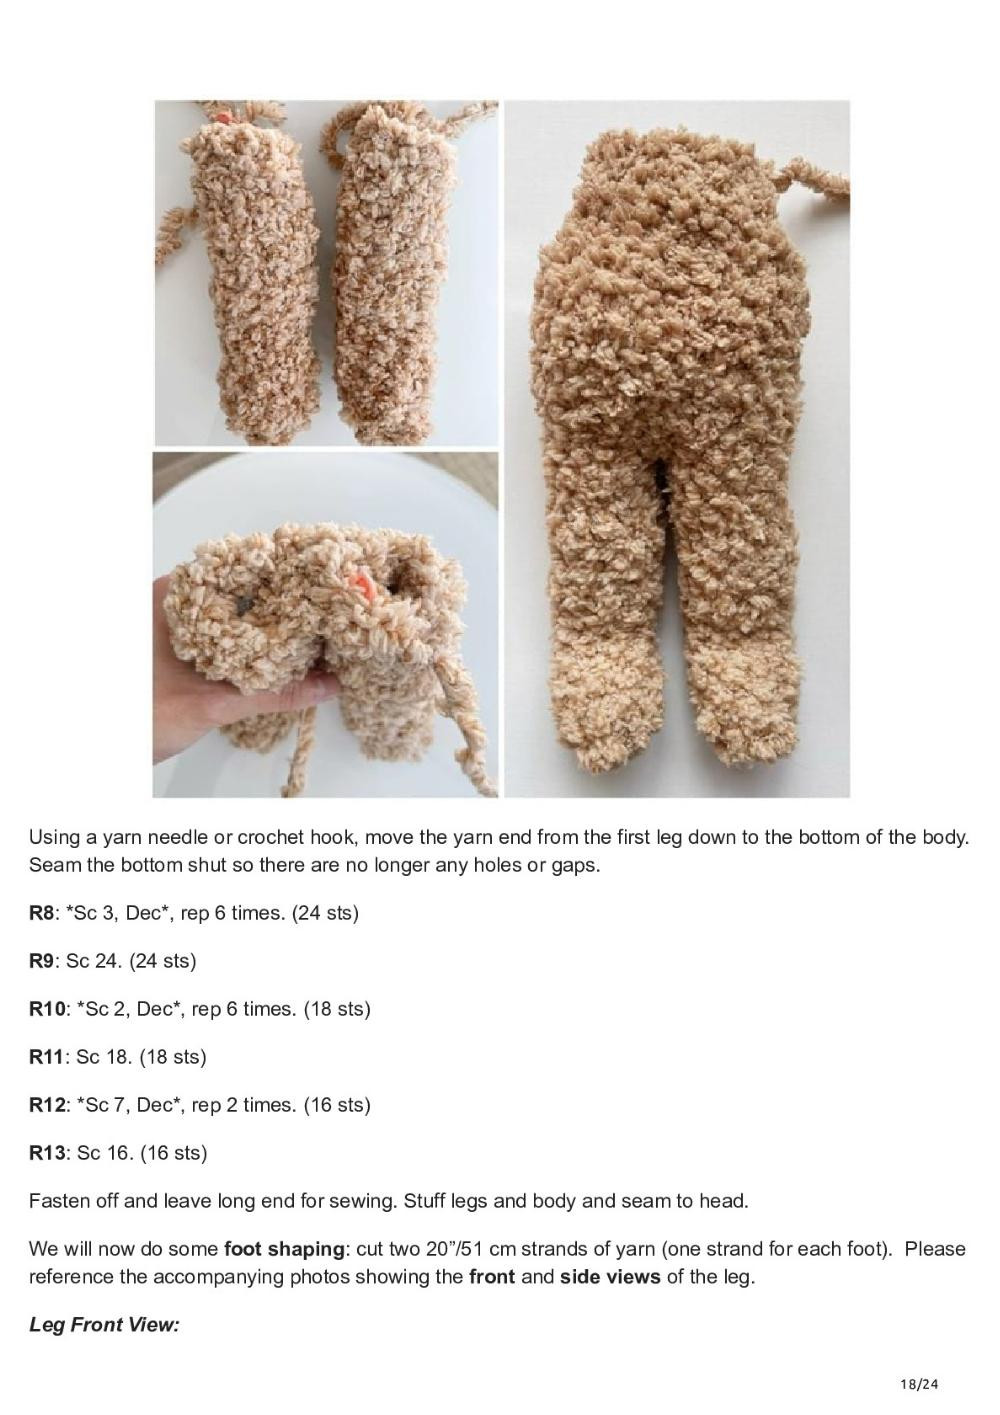 pattern fleece teddy and bunny